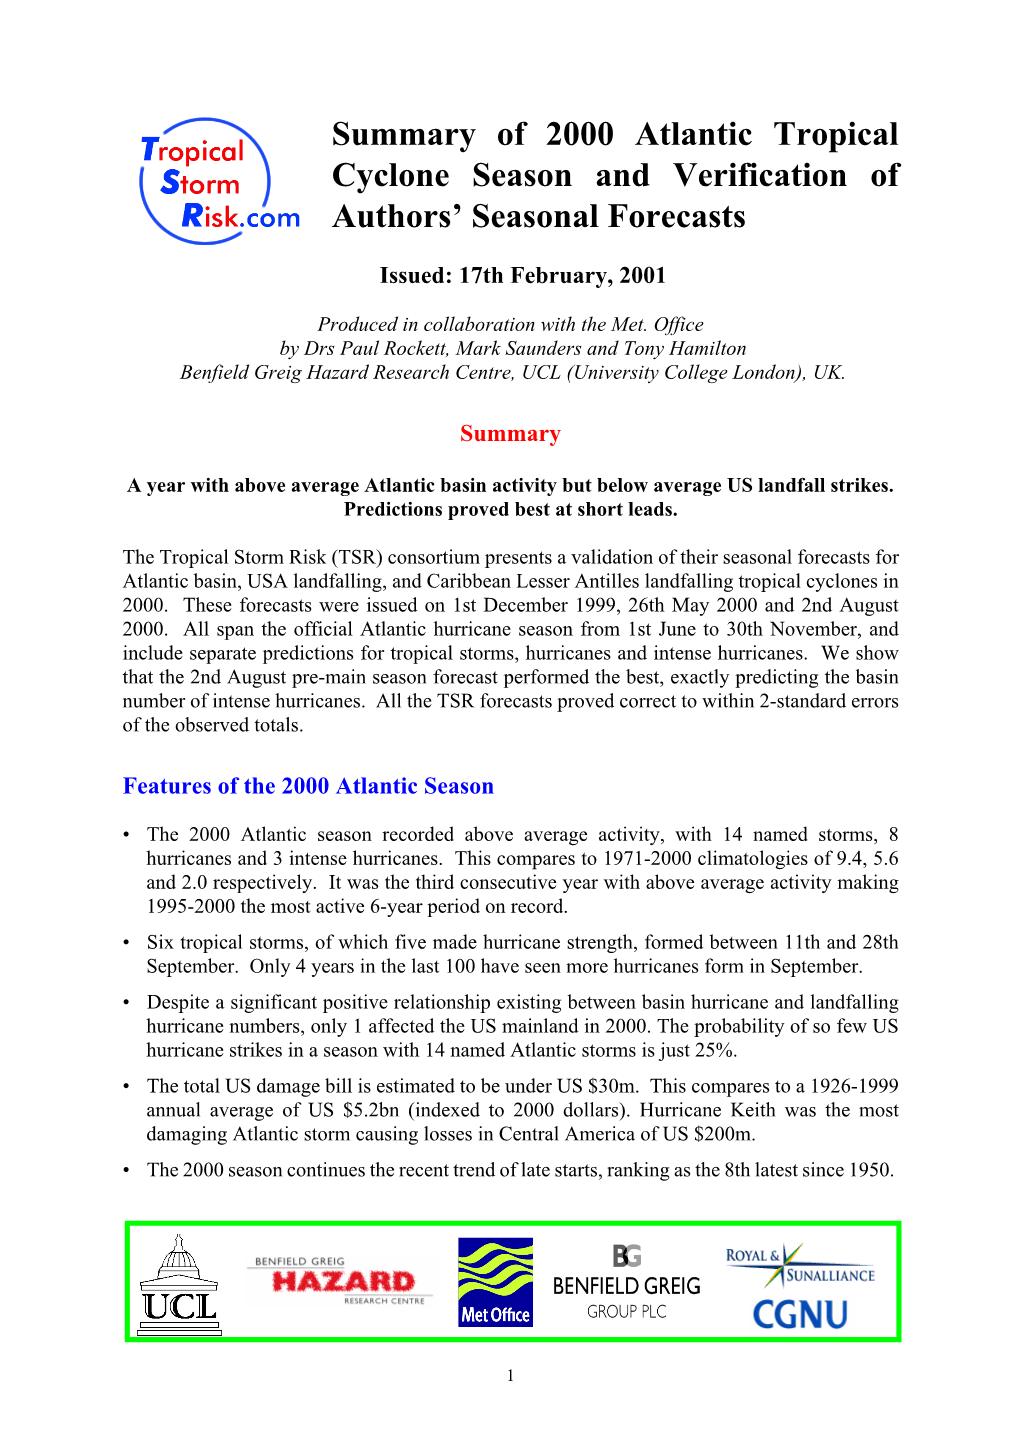 Summary of 2000 Atlantic Tropical Cyclone Season and Verification of Authors' Seasonal Forecasts